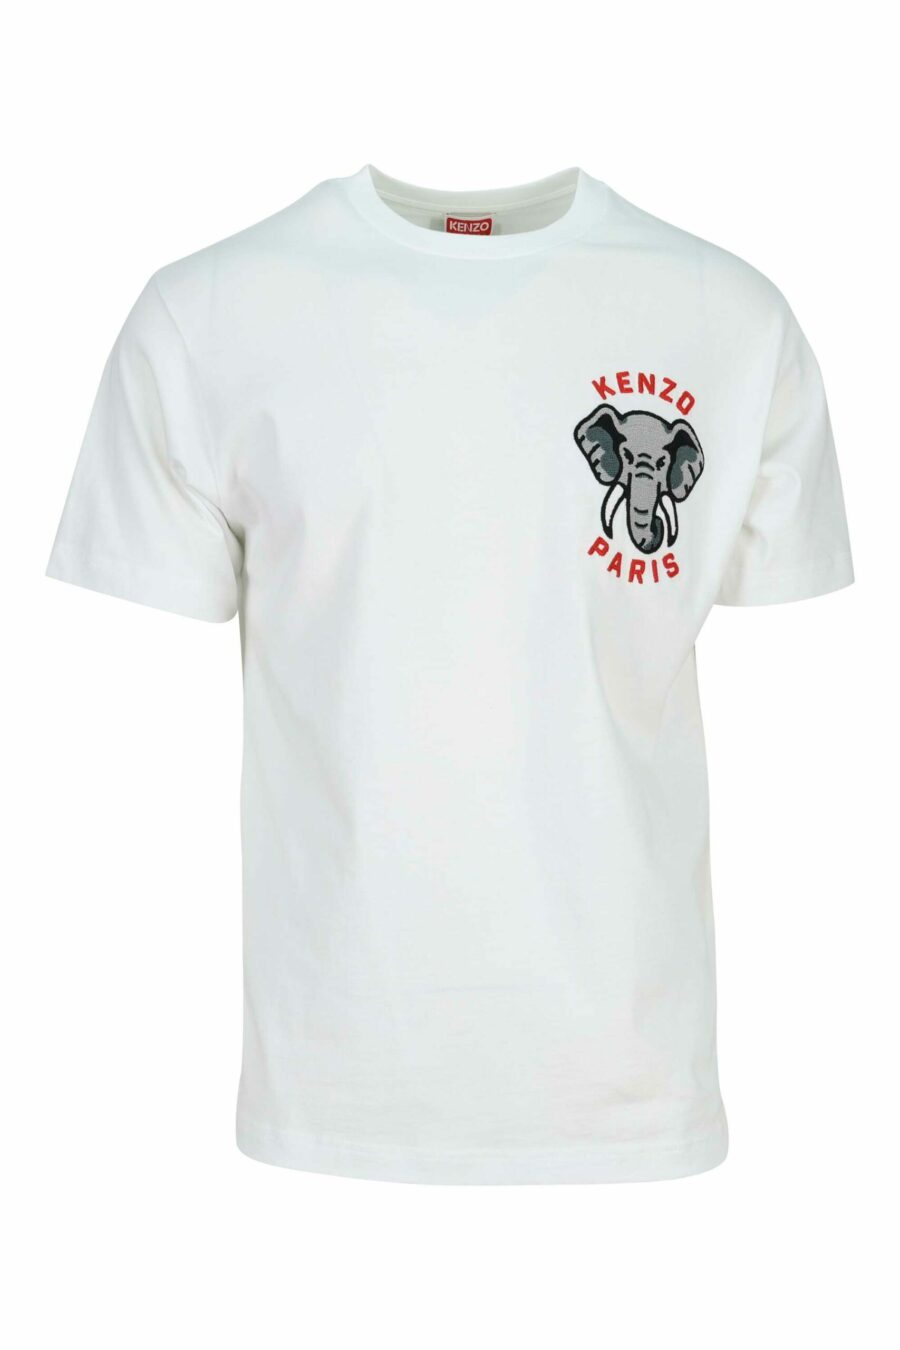 Camiseta blanca con minilogo "kenzo elephant" multicolor - 3612230625297 scaled